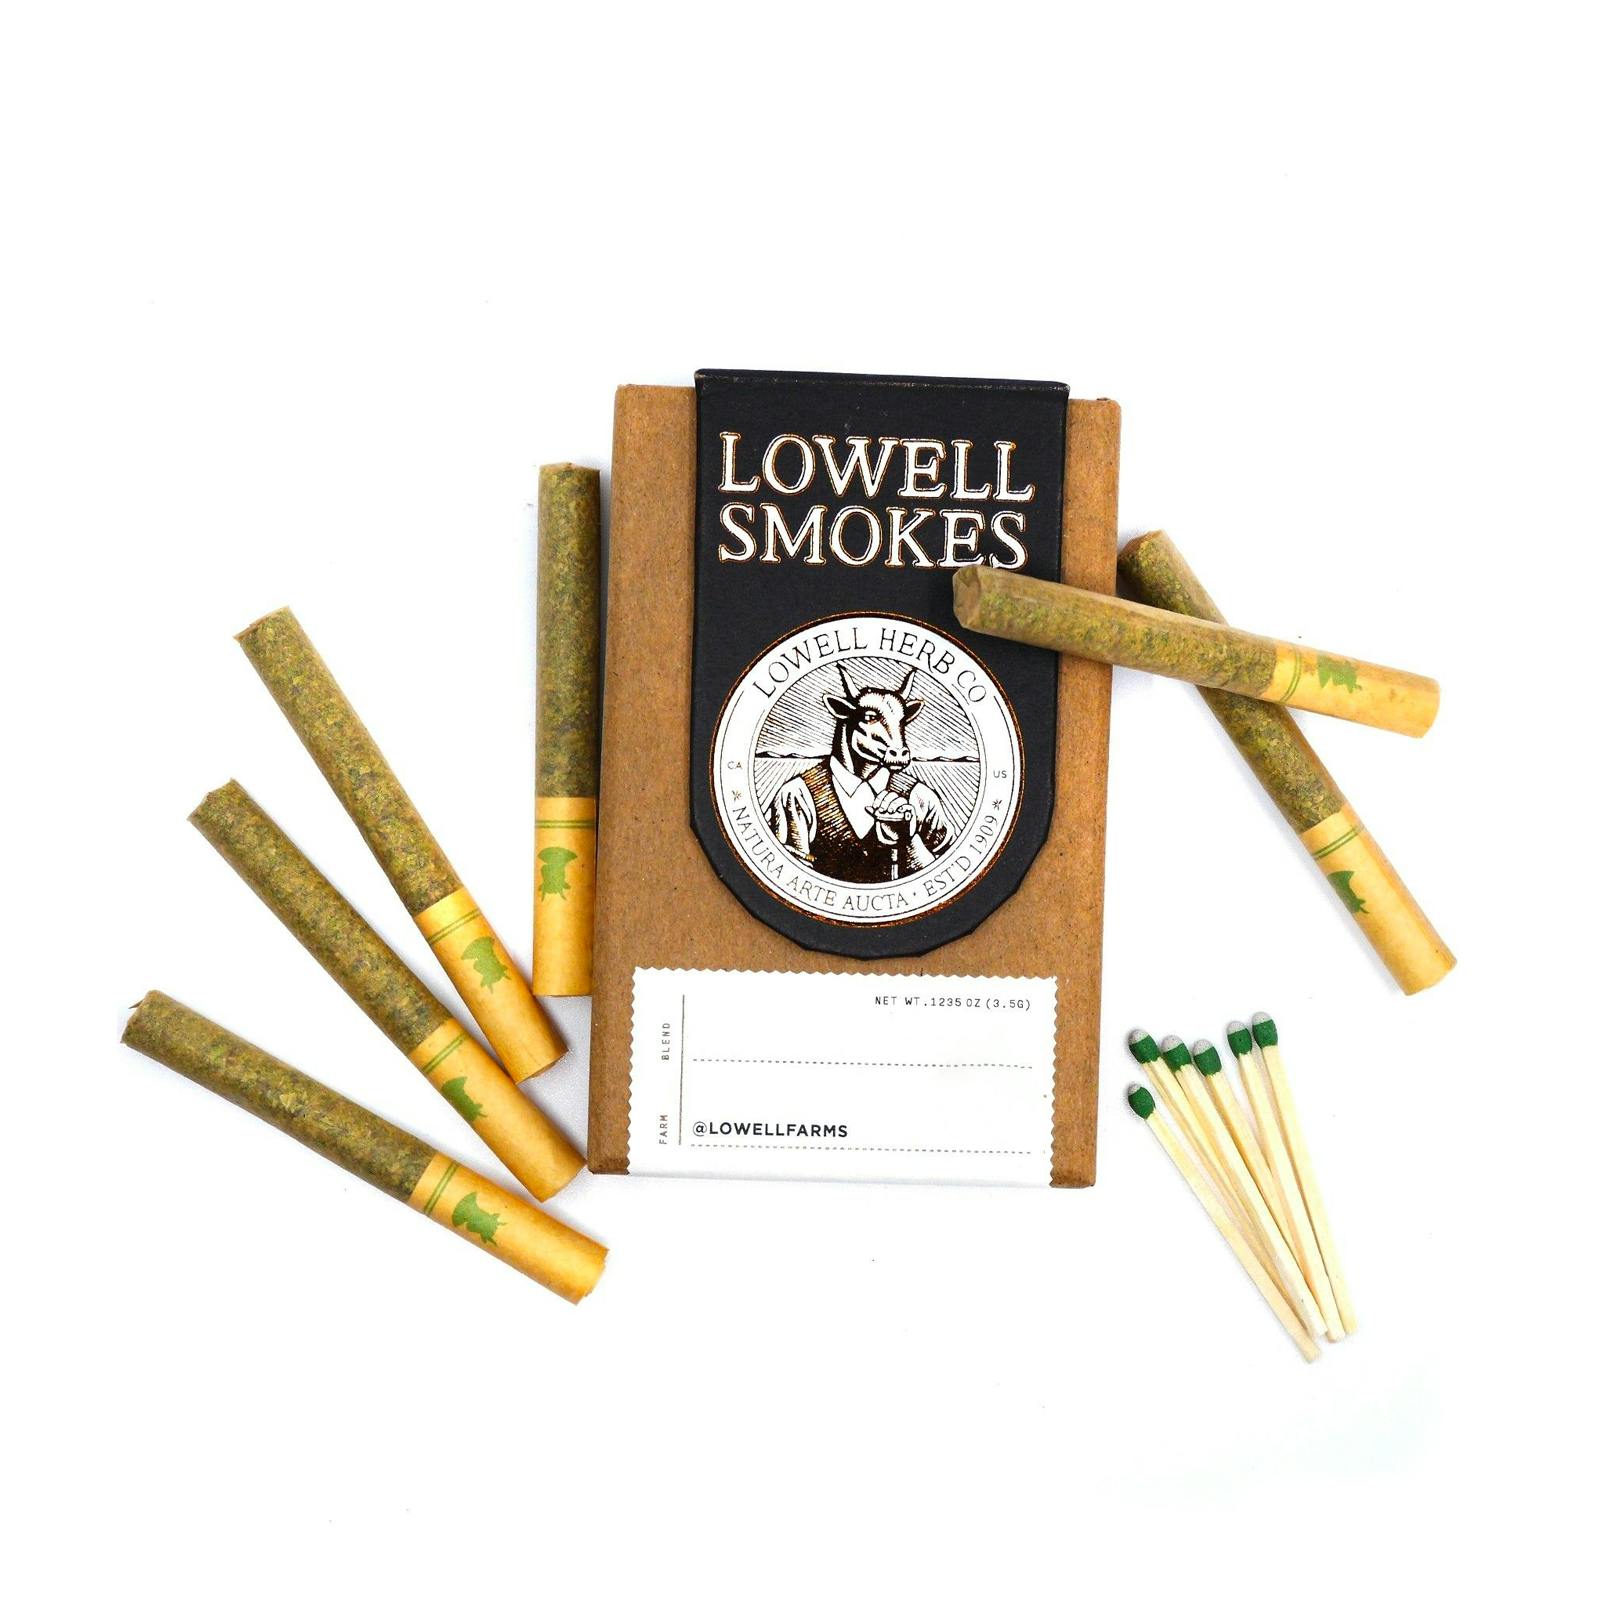 The Creative Sativa Lowell Smokes 6 pack